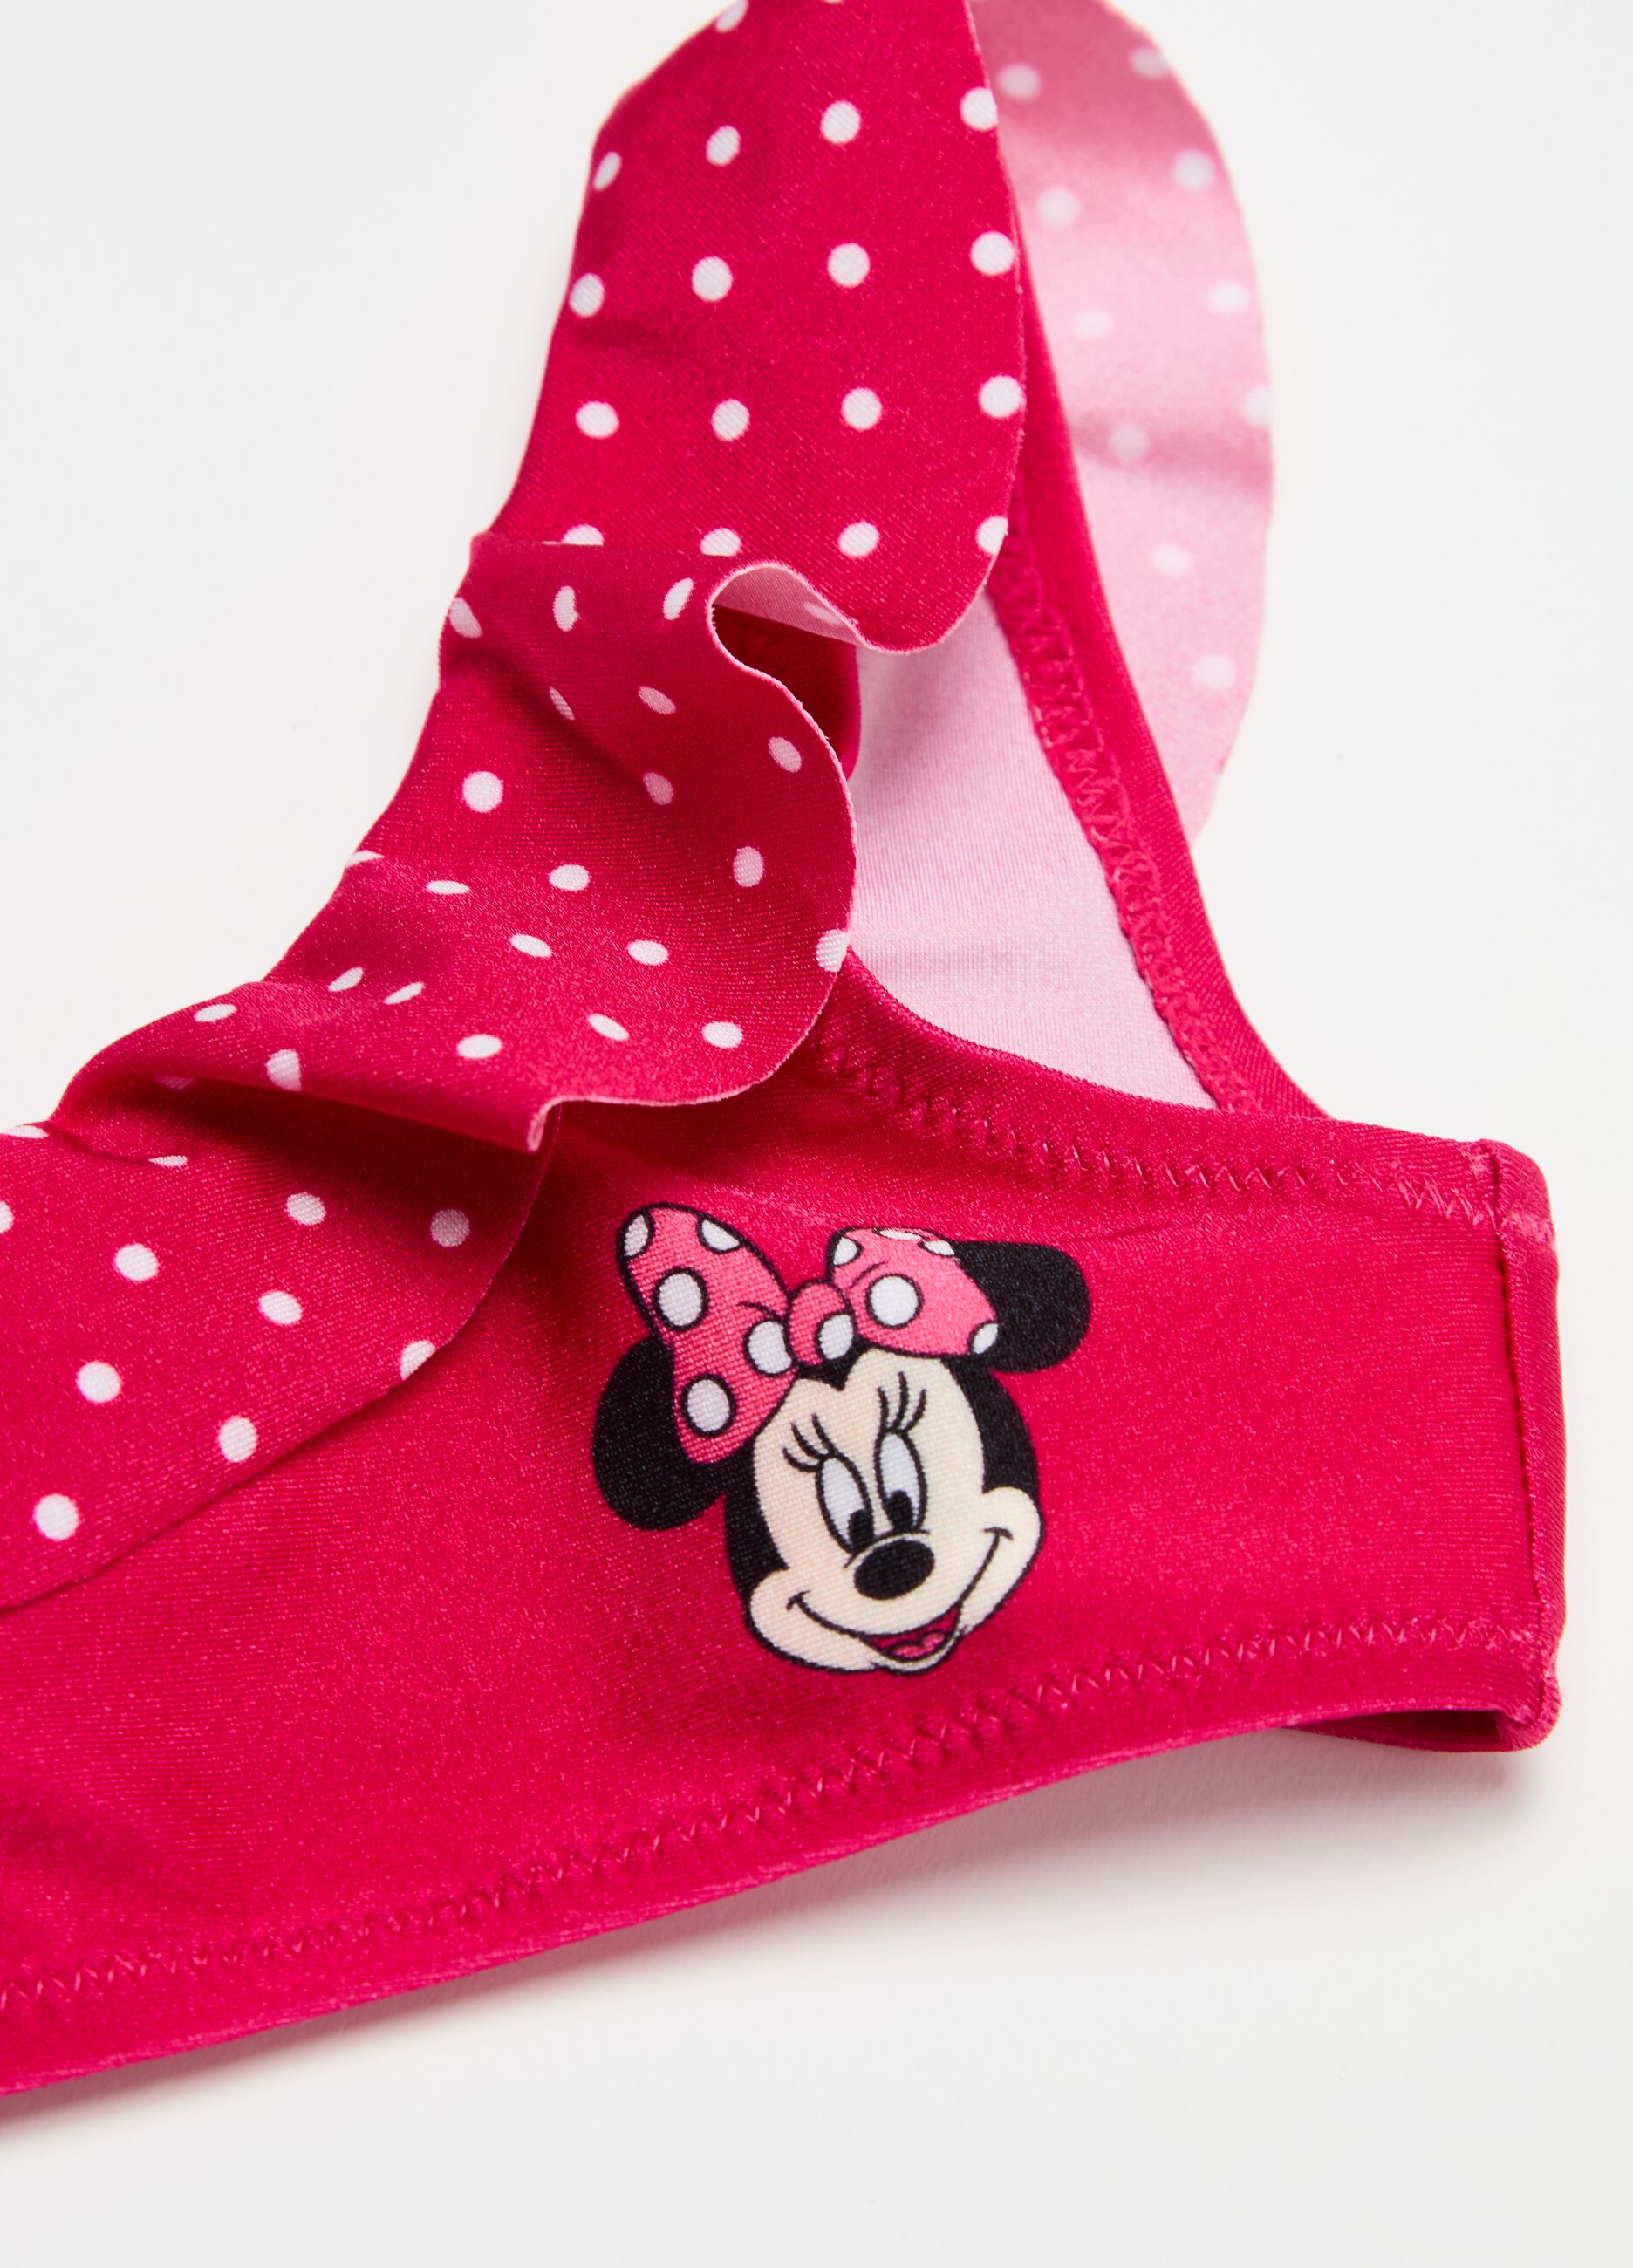 Bikini with Minnie Mouse and polka dot print